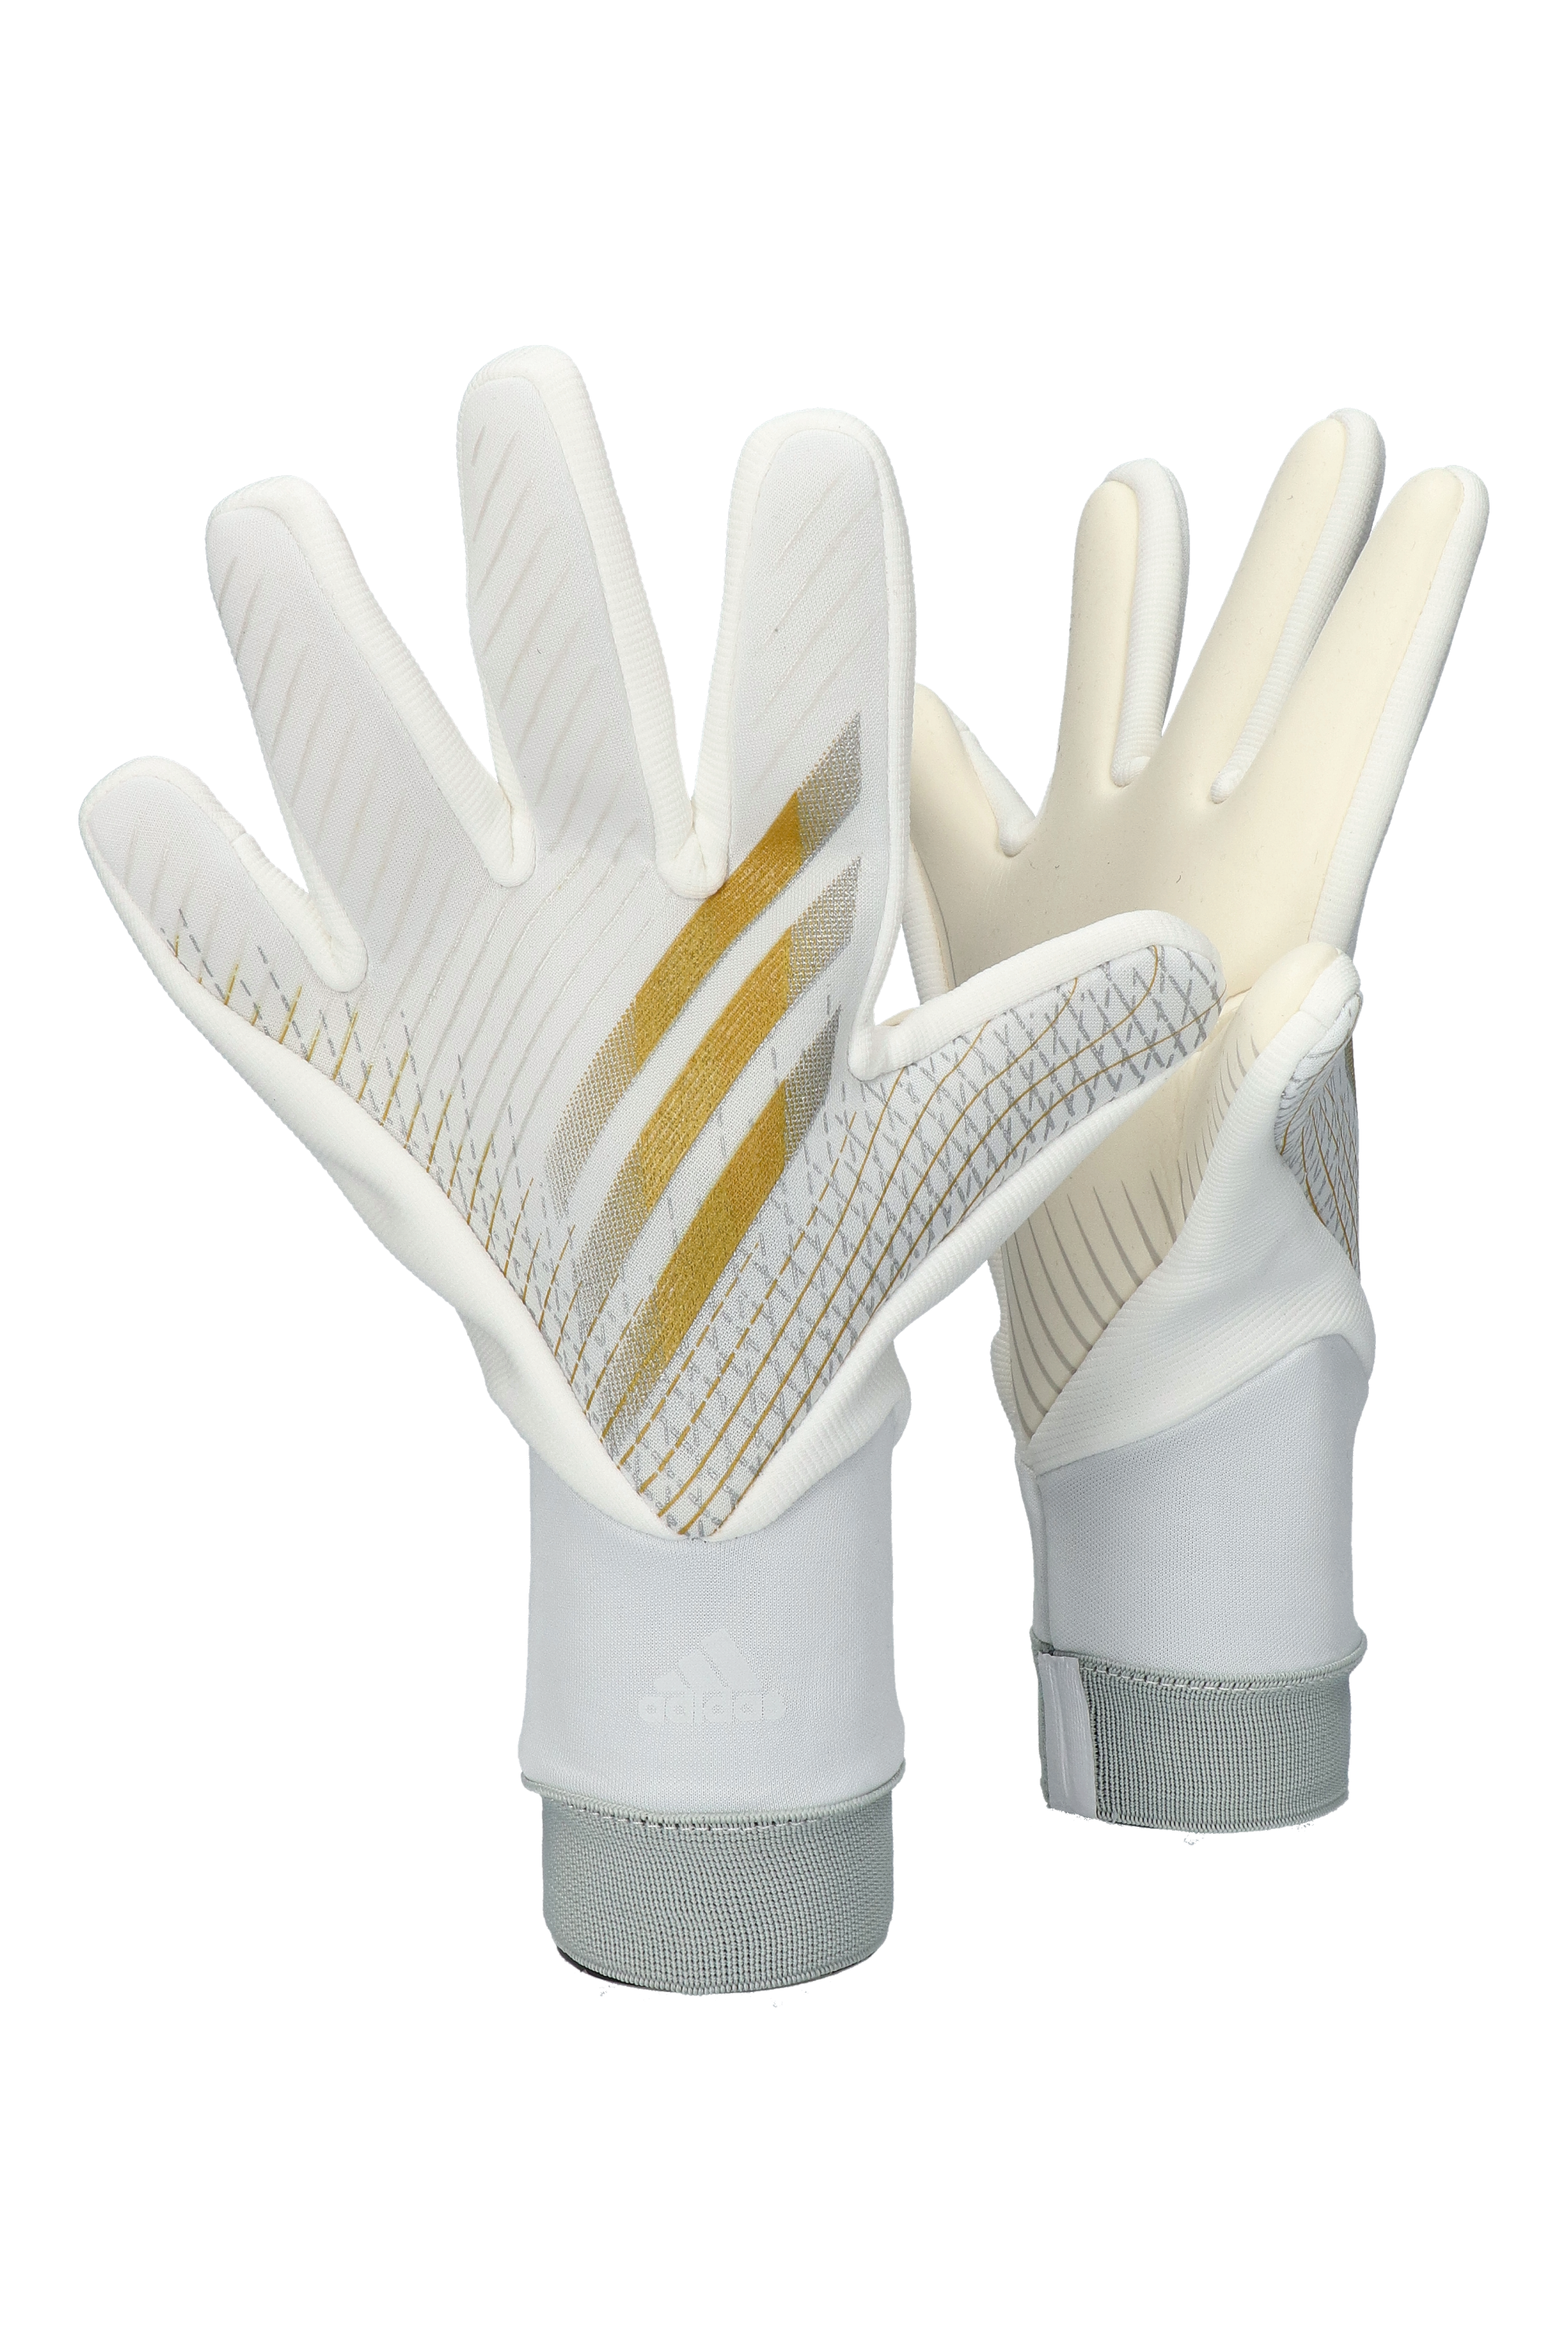 junior goalkeeper gloves adidas